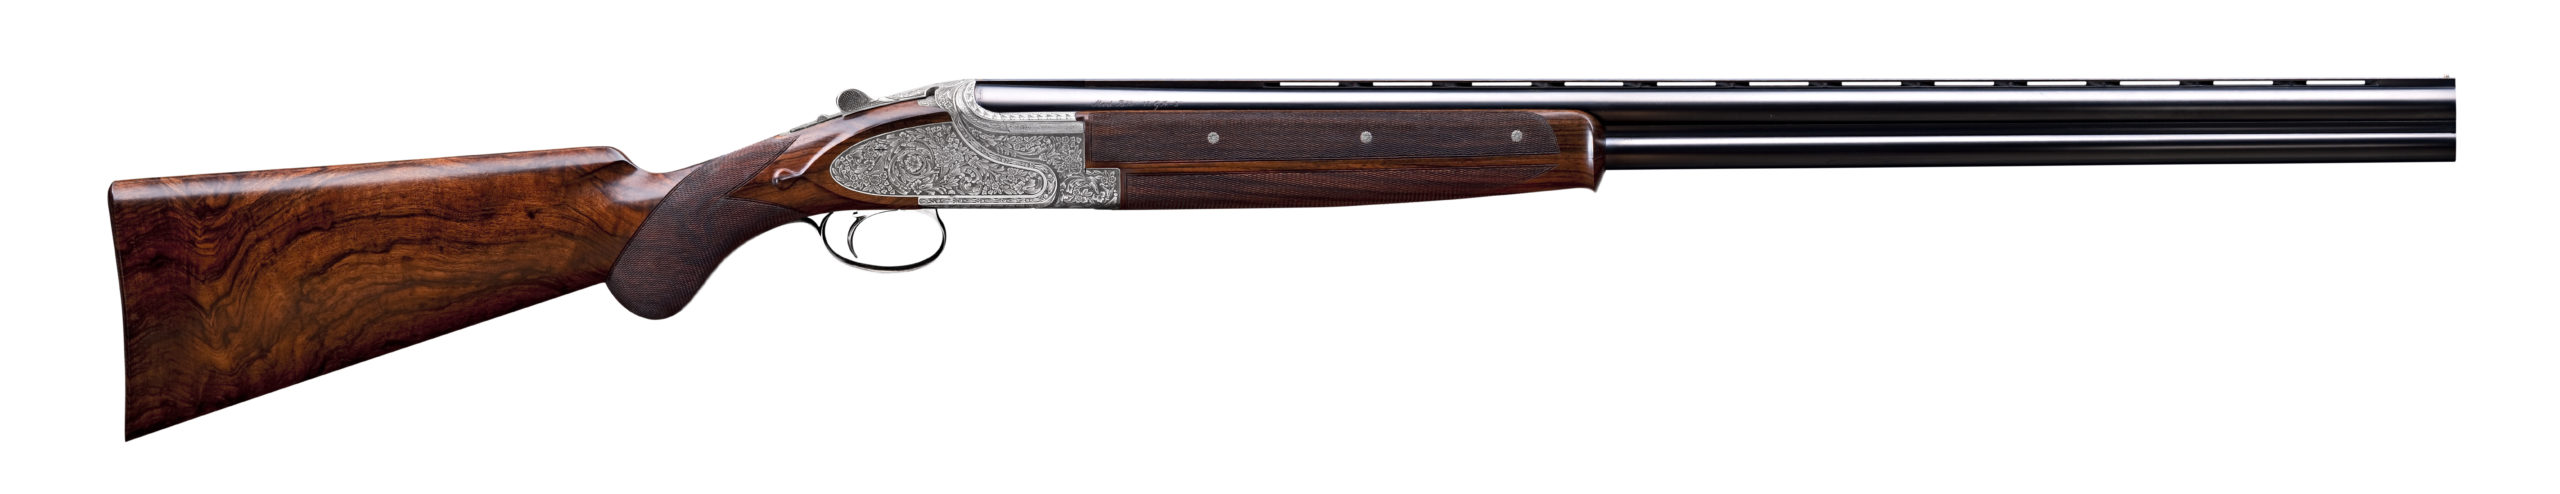 Browning-le-fusil-superposé-B25